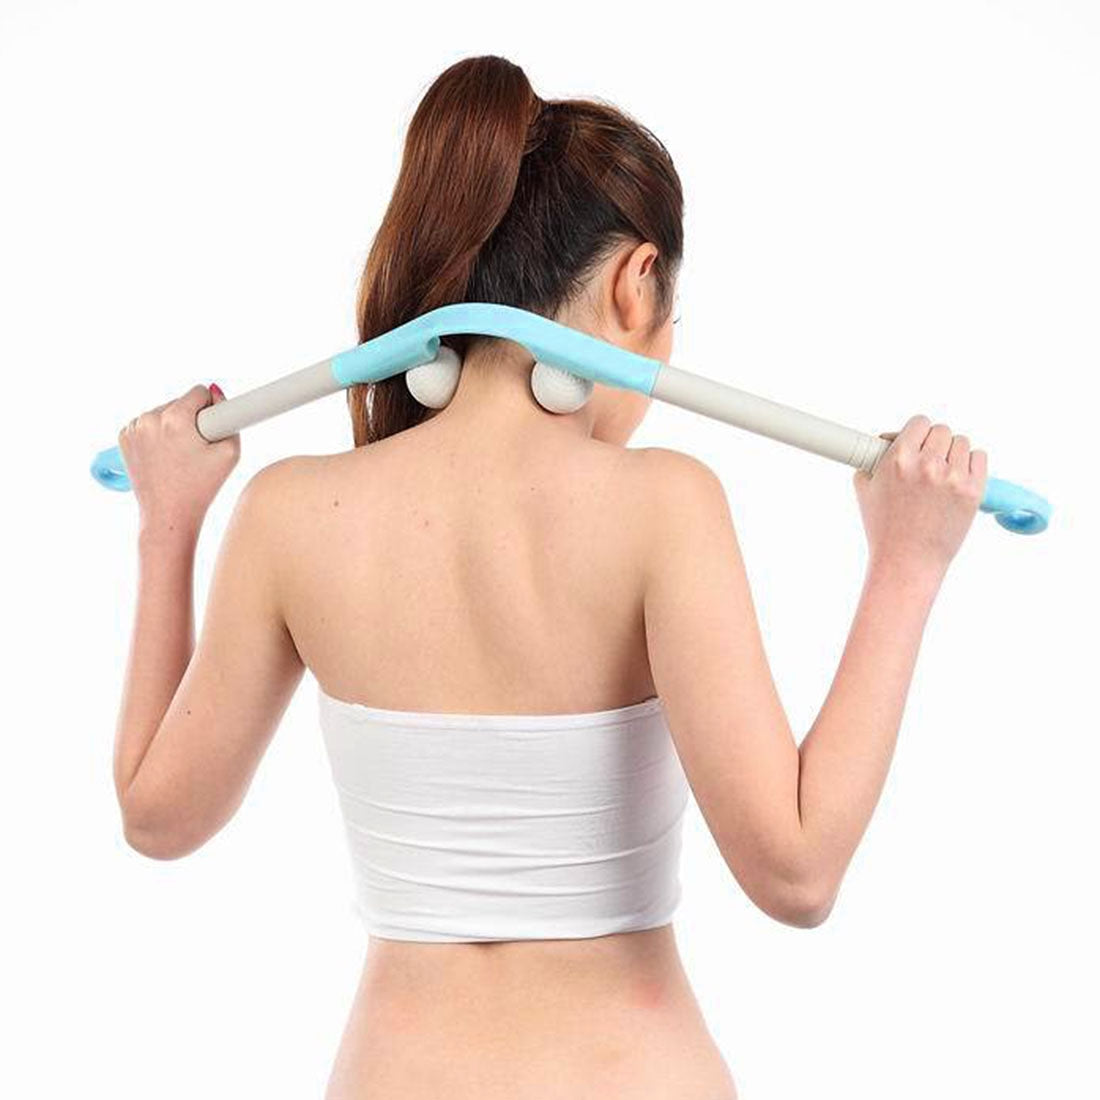 FunAdd Multi-Functional Full Body Neck Shoulder Waist Back Leg Roller Ball Massager Stick, Random Color Delivery